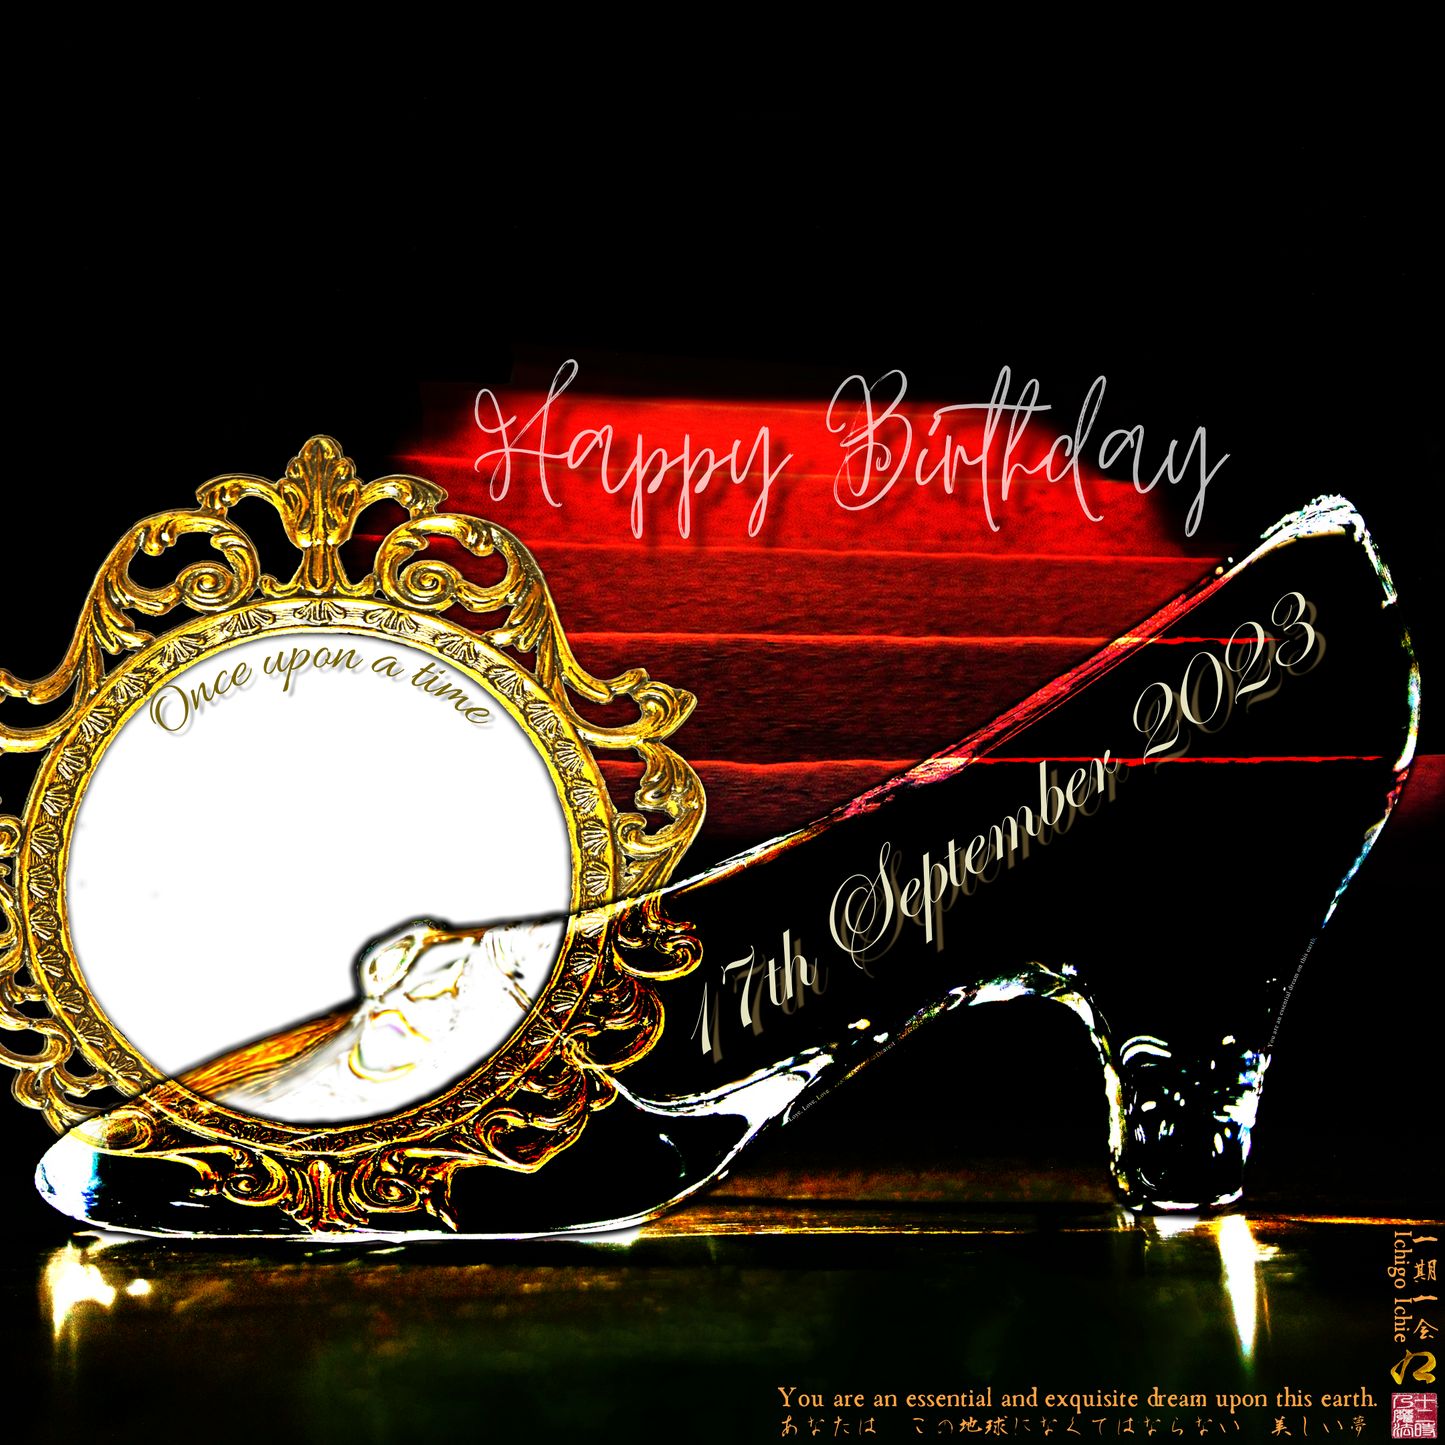 Happy Birthday Glass Slipper "Ichigo Ichie" 17th September 2023 the Left (1-of-1) NFT Art